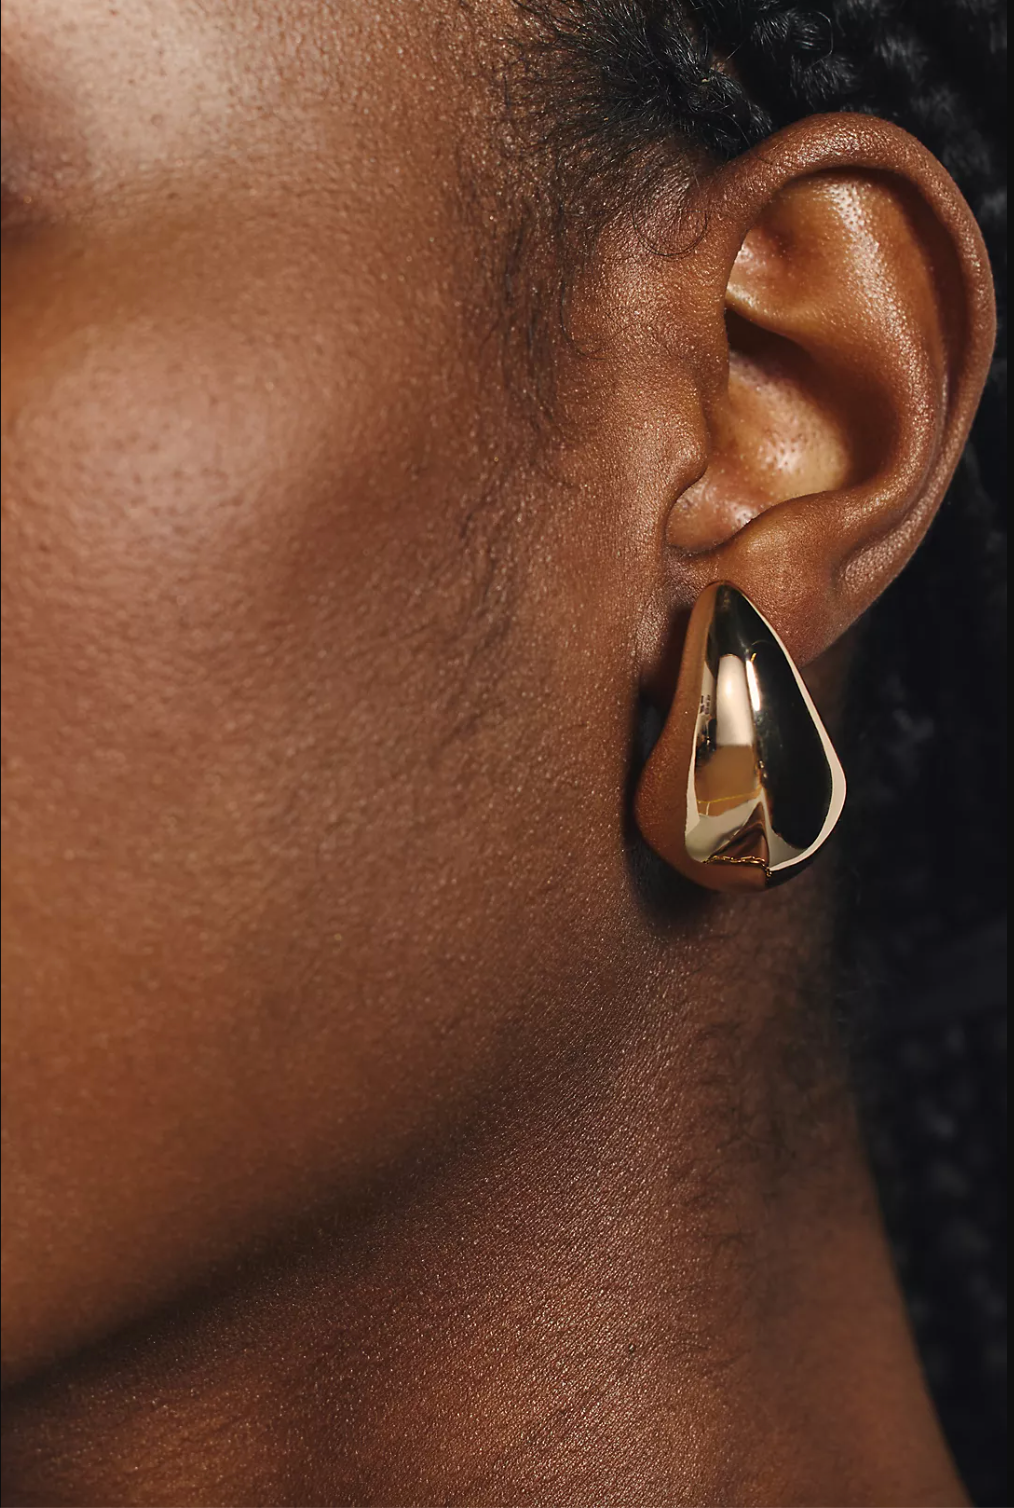 Incredibly Iconic Silver Earrings - Jewelry by Bretta